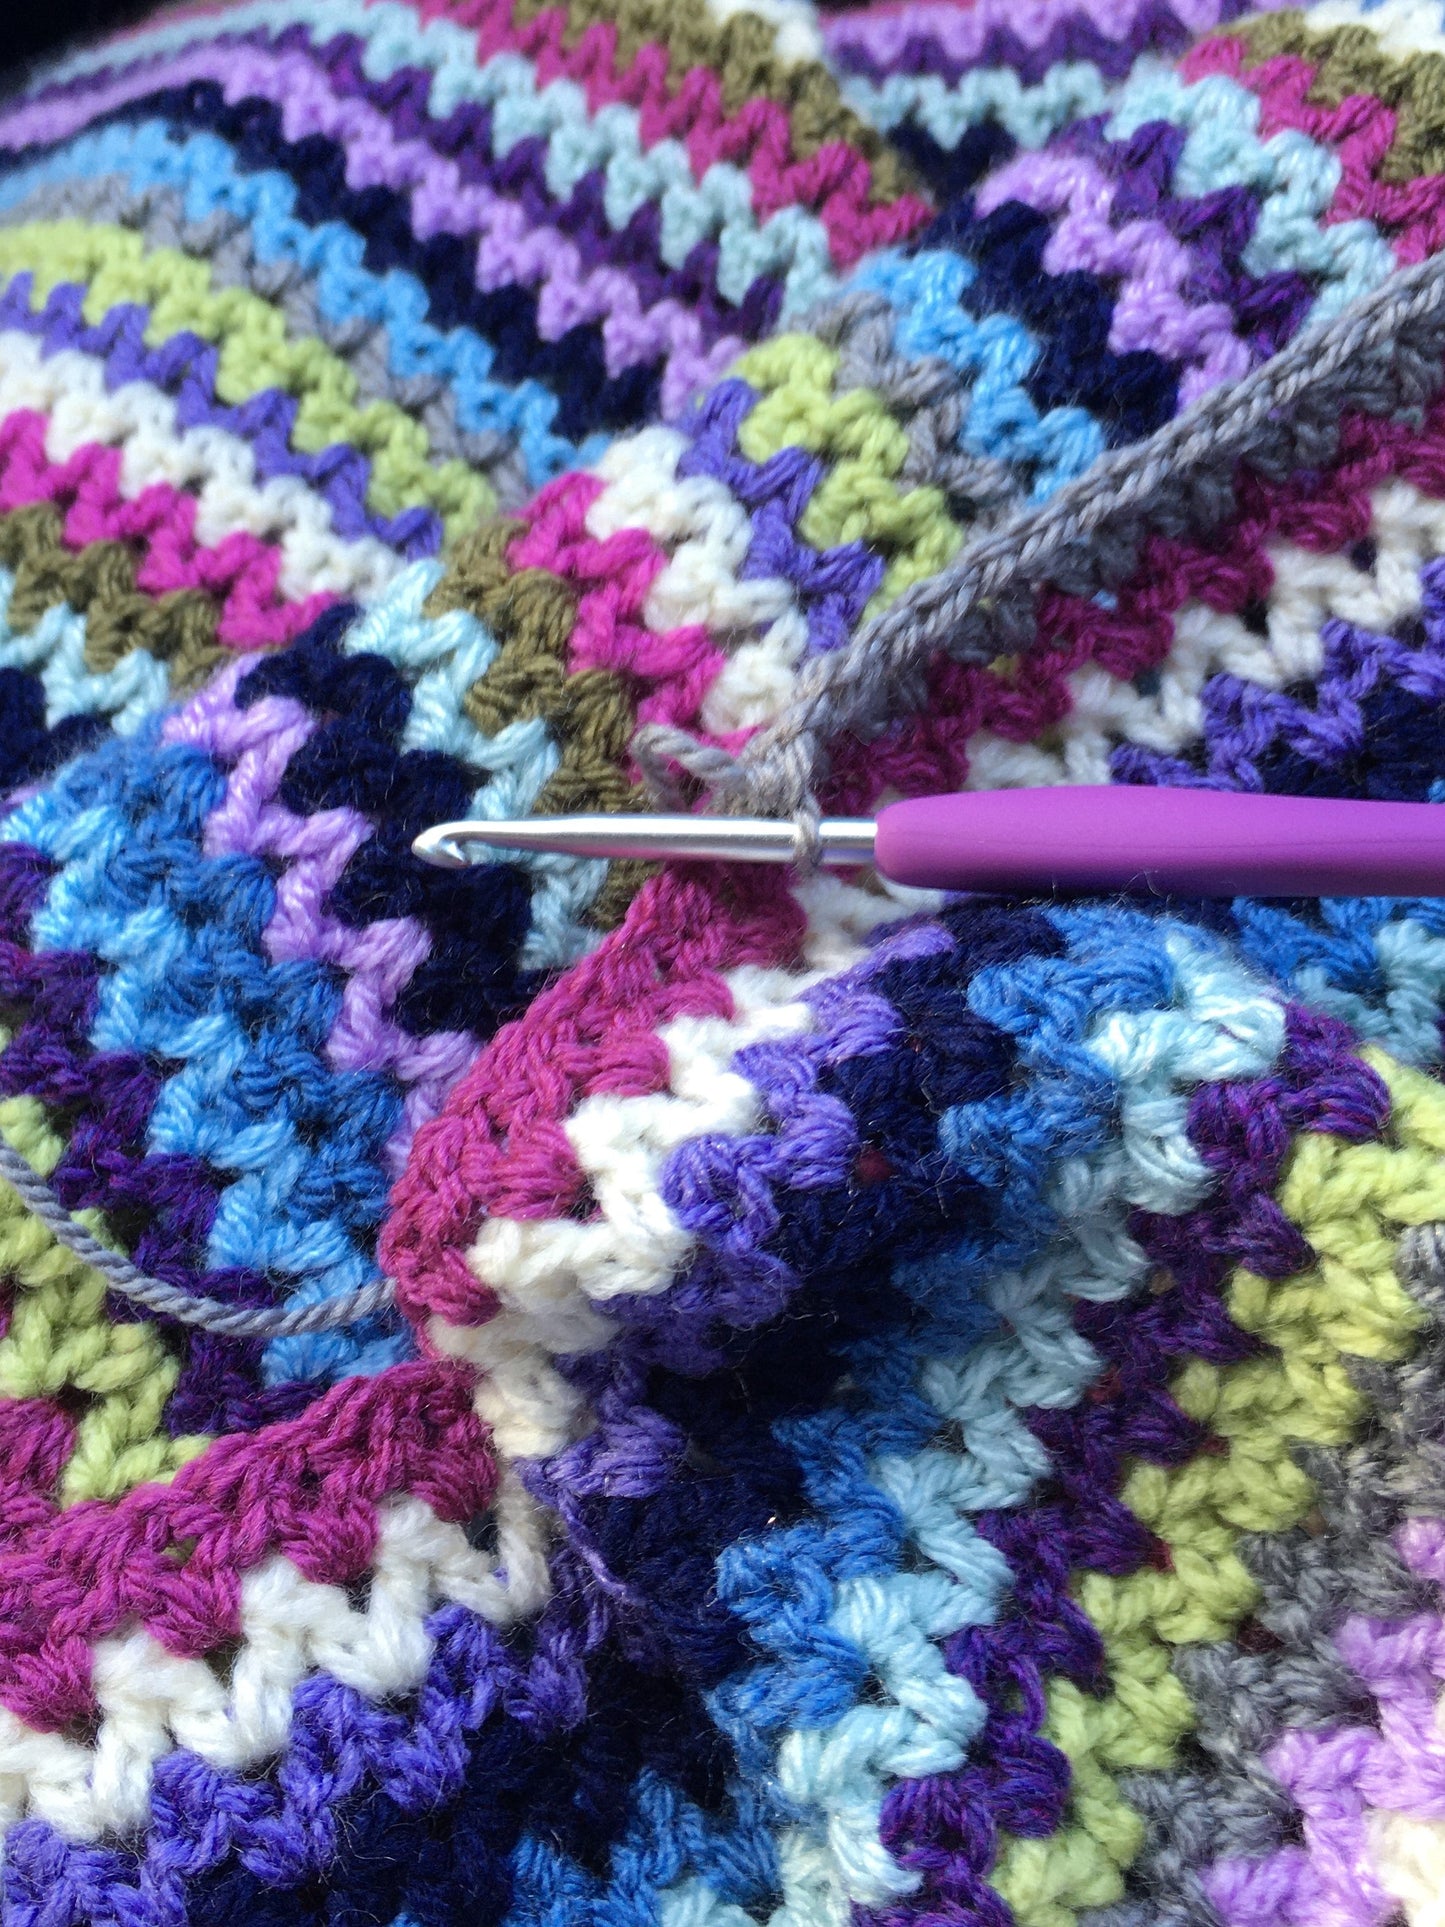 Crochet Next Steps Workshop - Monday 20th November